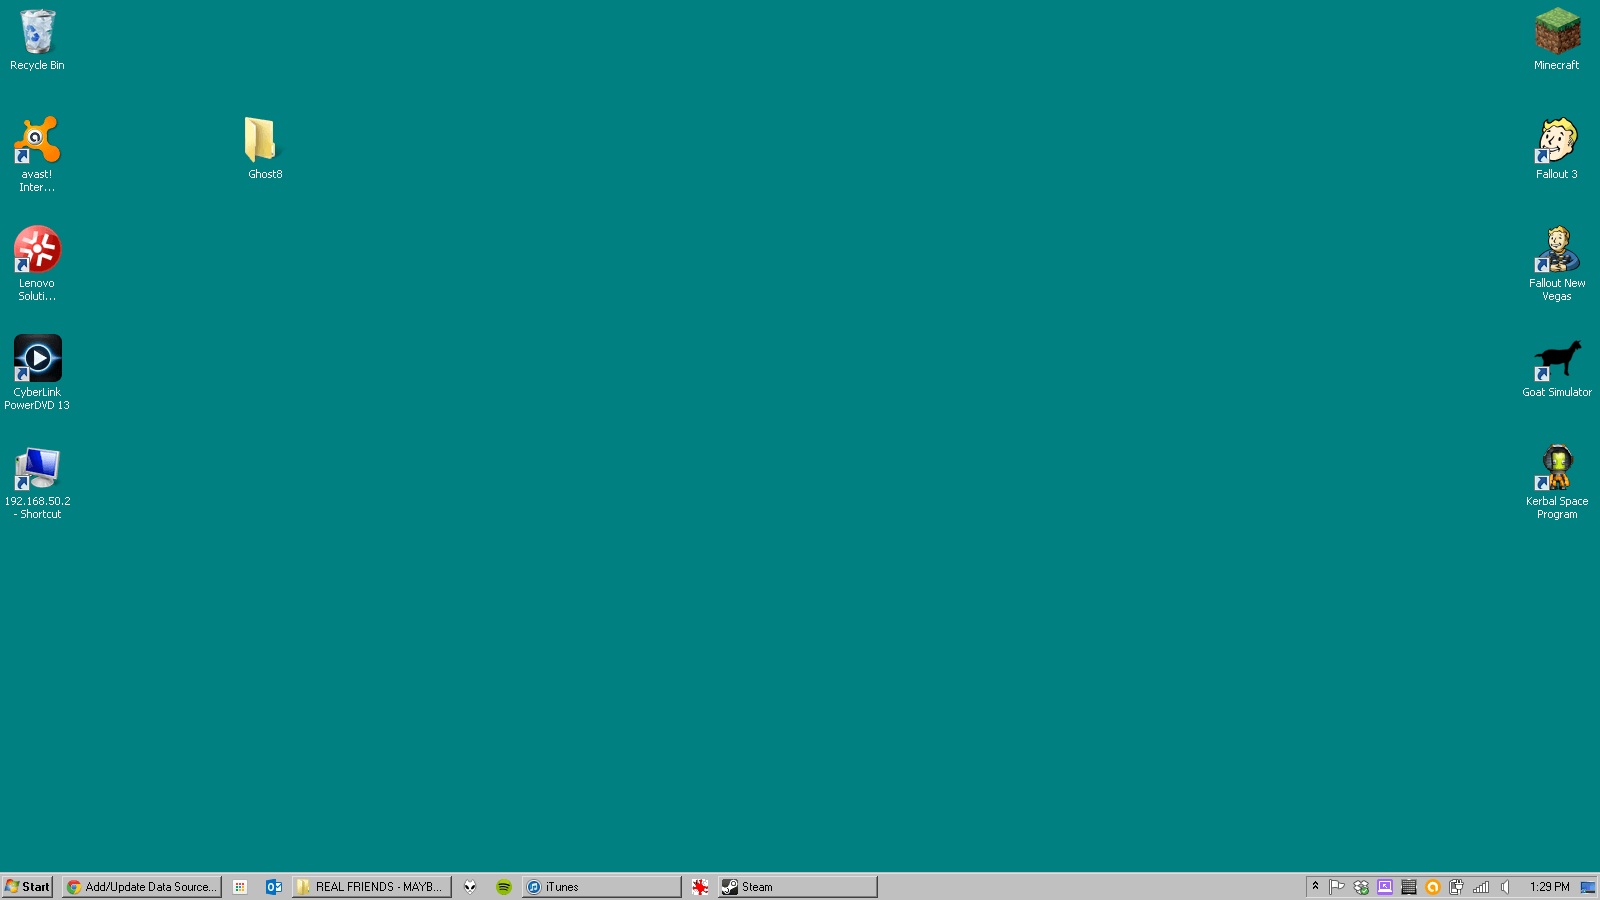 Windows 98 Backgrounds Wallpaper Cave